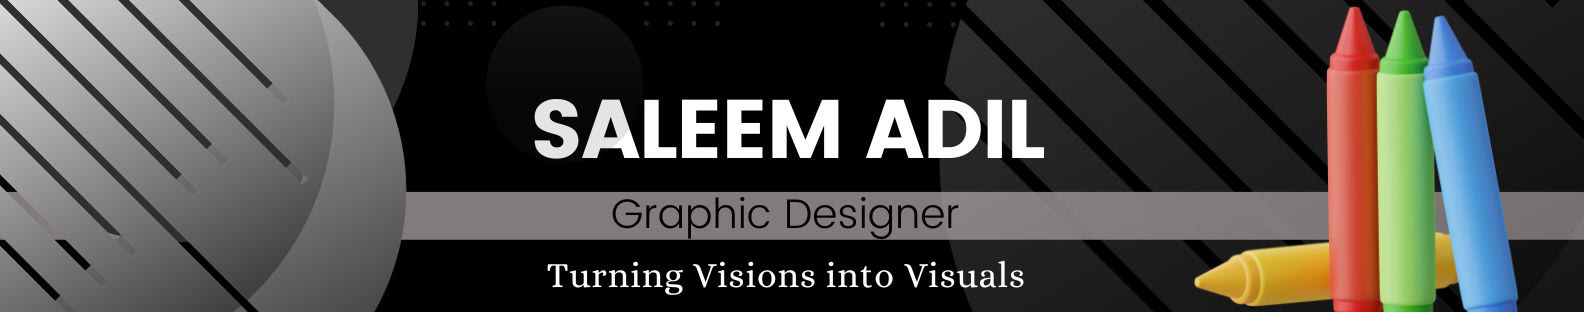 Saleem Adil's profile banner